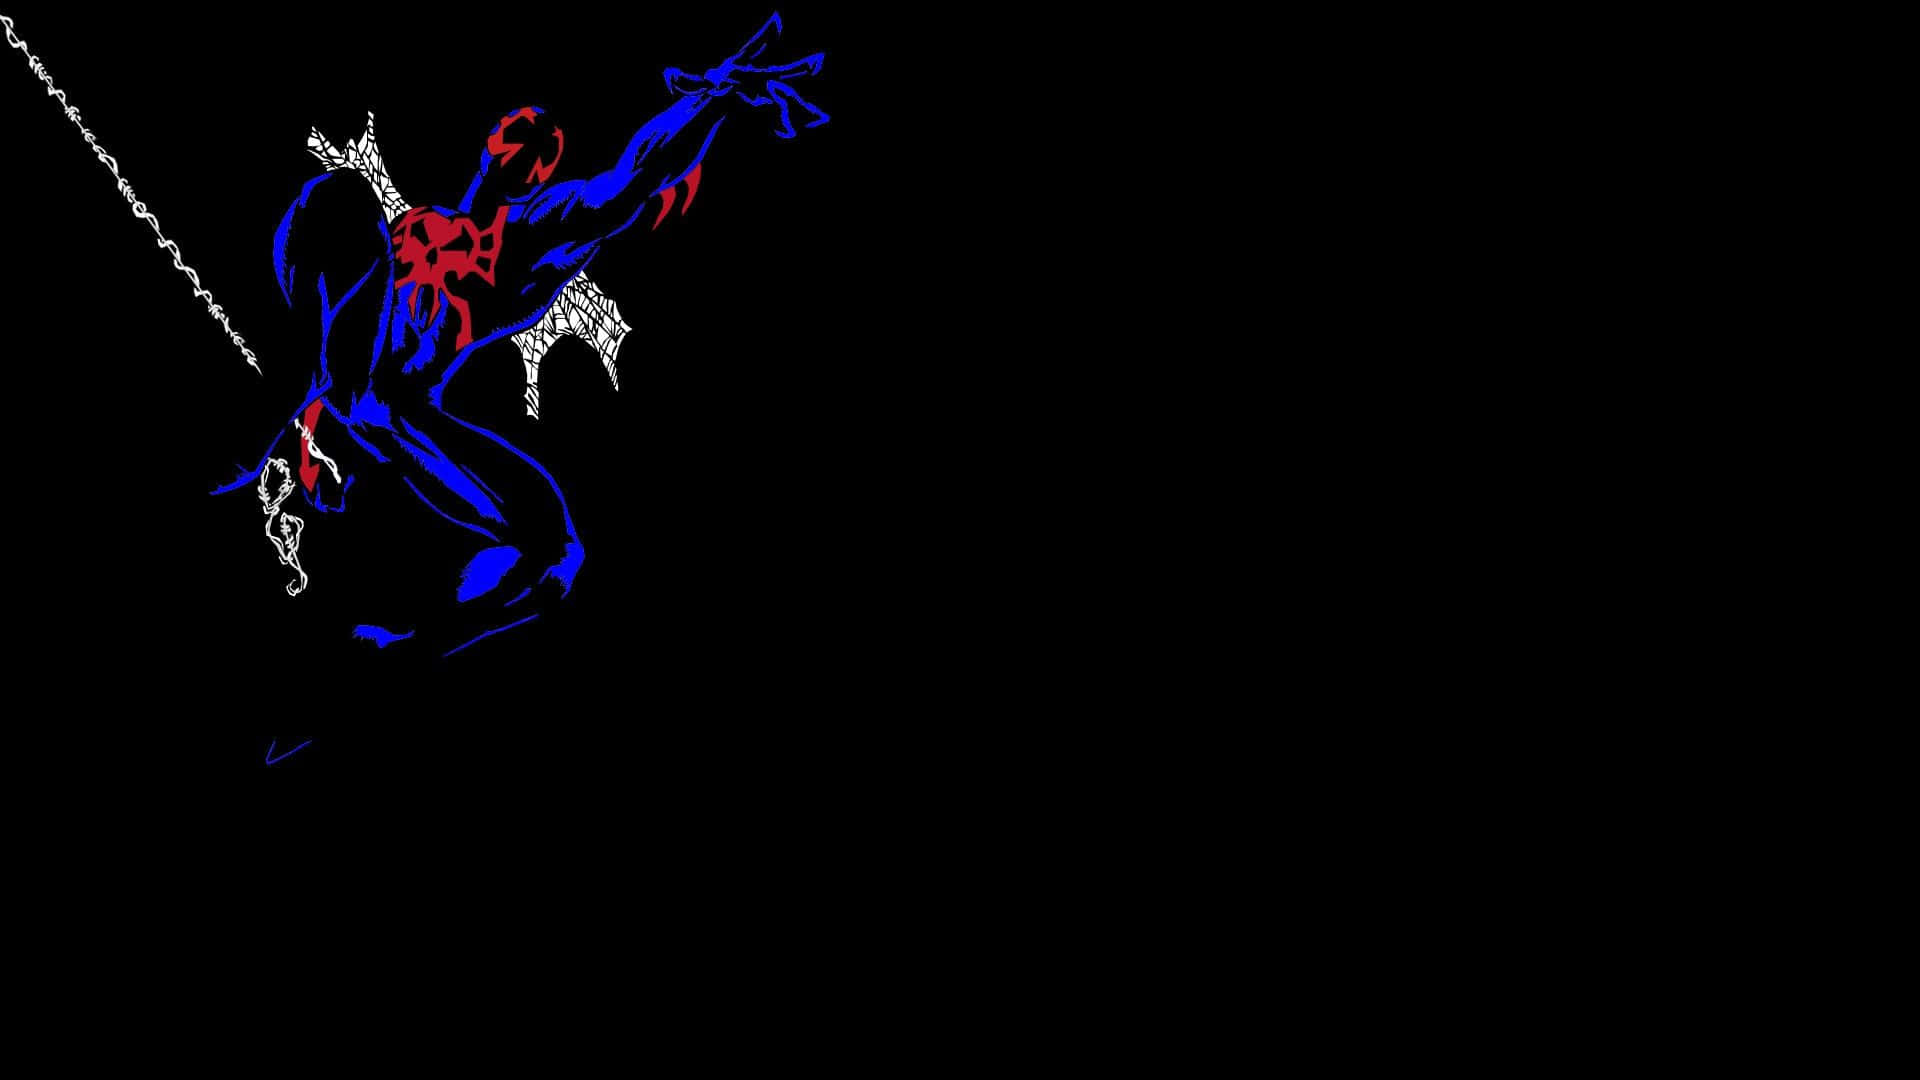 Stunning Spider-Man 2099 in Action Wallpaper